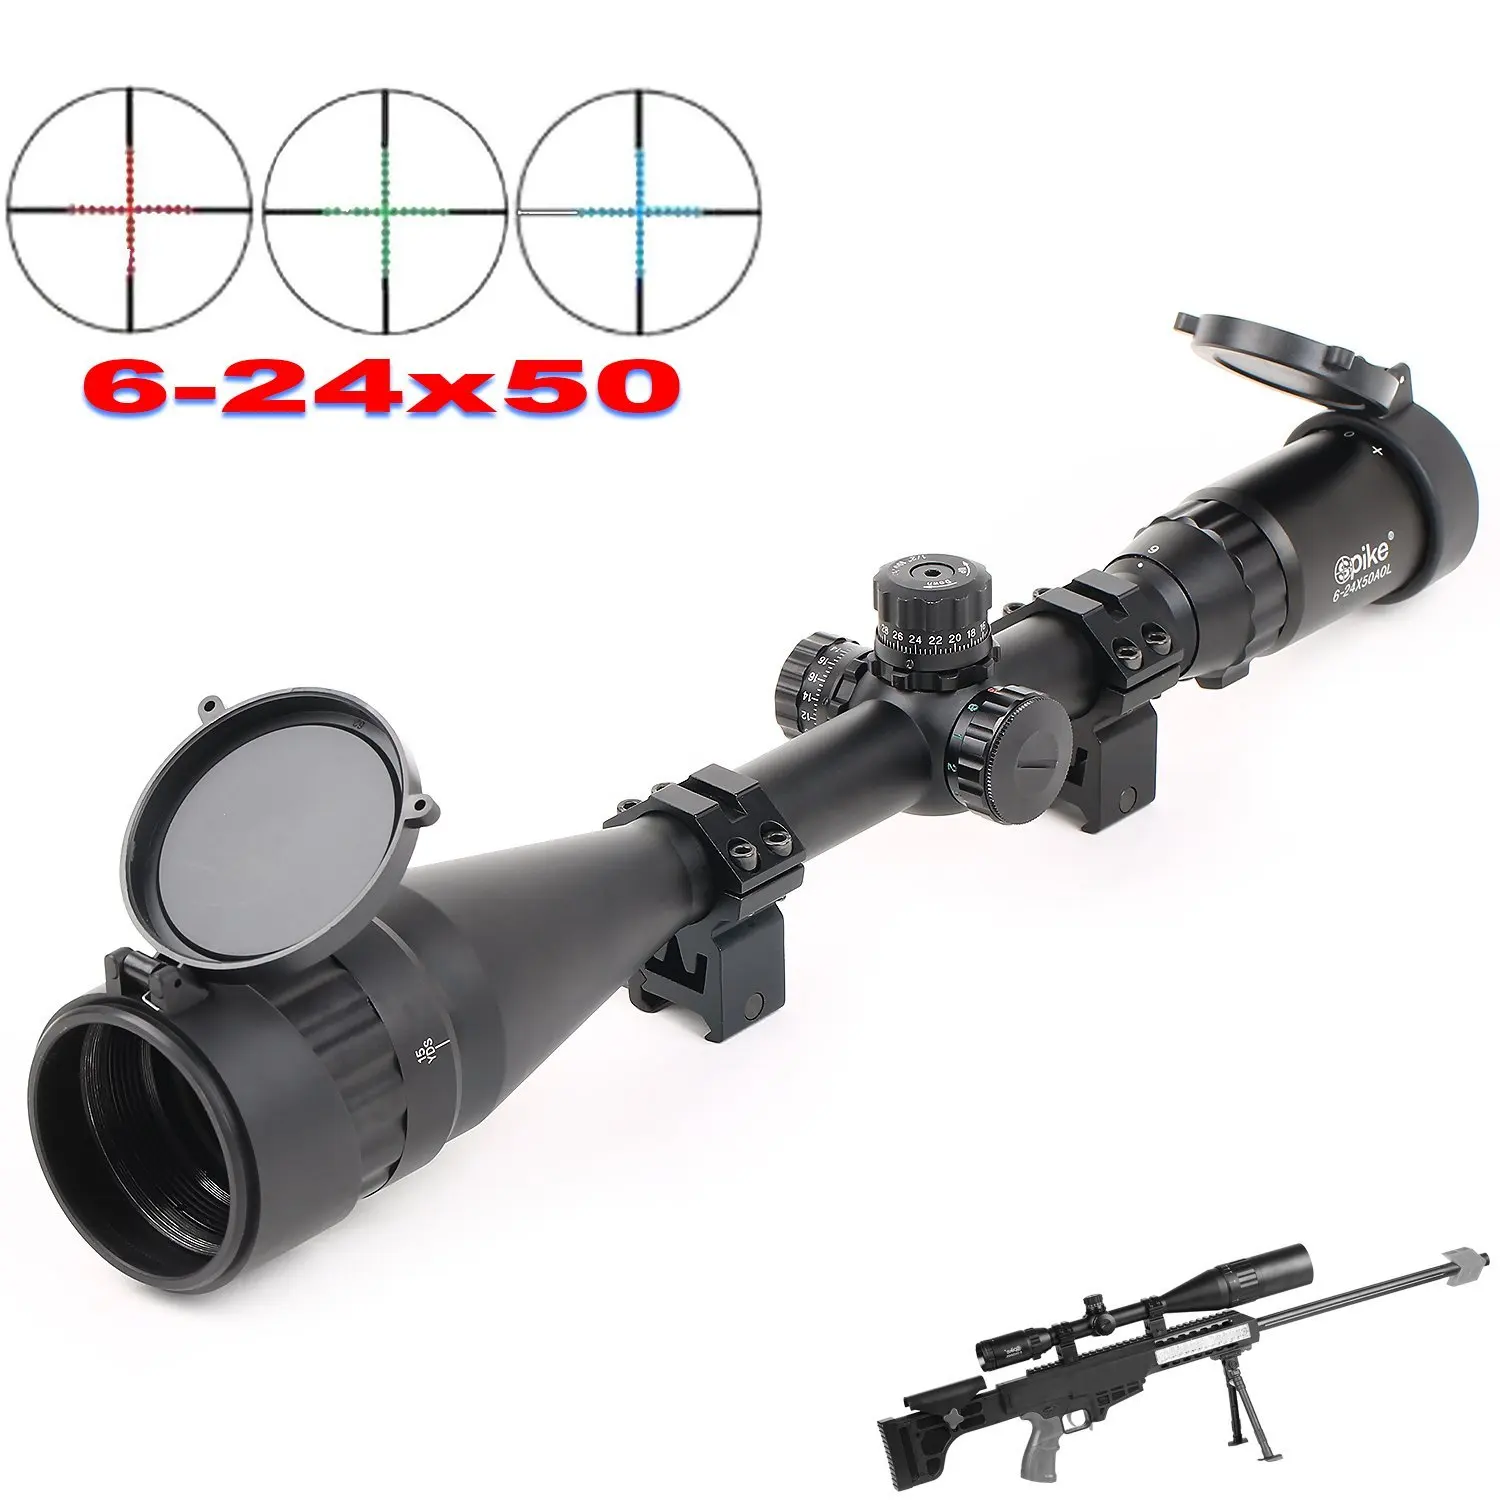 Прицелы 6 24x50. Прицел оптический 3-9x 50mm Red/Green mil-Dot Sight illuminated Optics Hunting Sniper scope sr2g. Riflescope 6-24x50. Riflescope прицел. Оптический прицел Discovery 1.2-6x24irai.